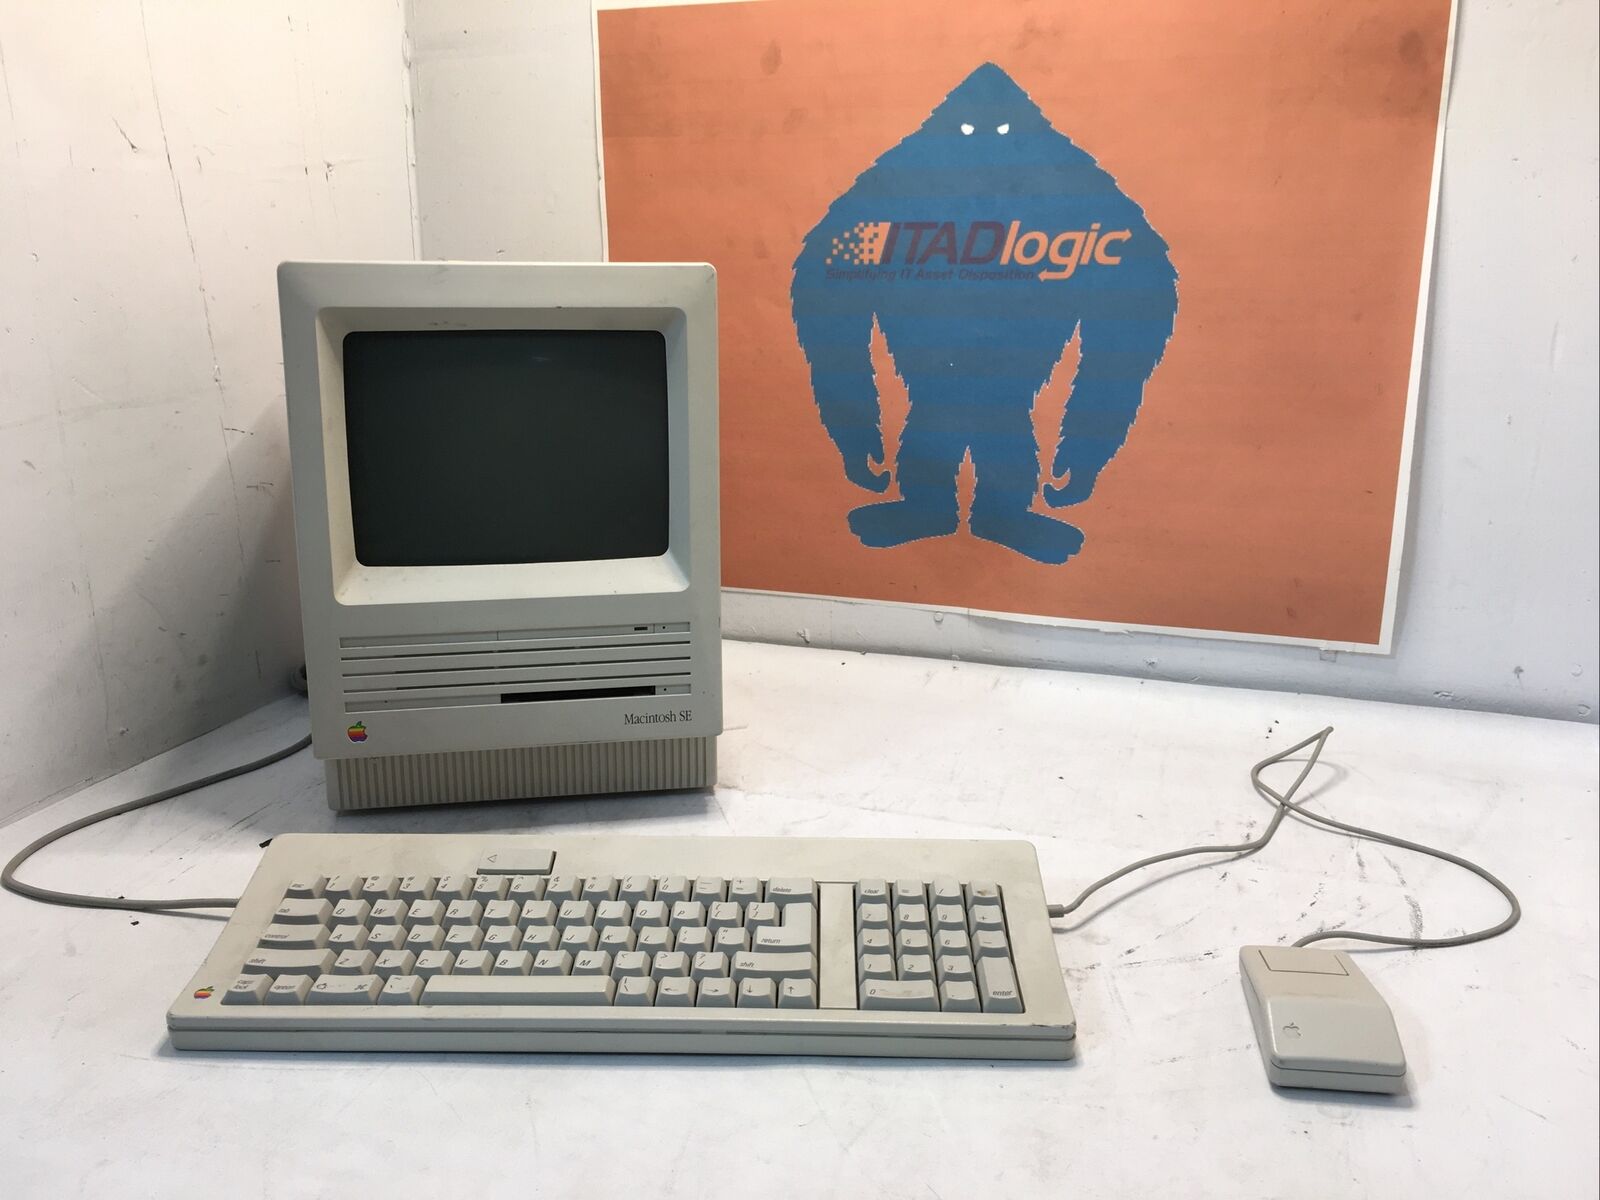 Macintosh se M5011 2MB Keyboard Mouse - Working, Loads OS - Vintage Apple J2854